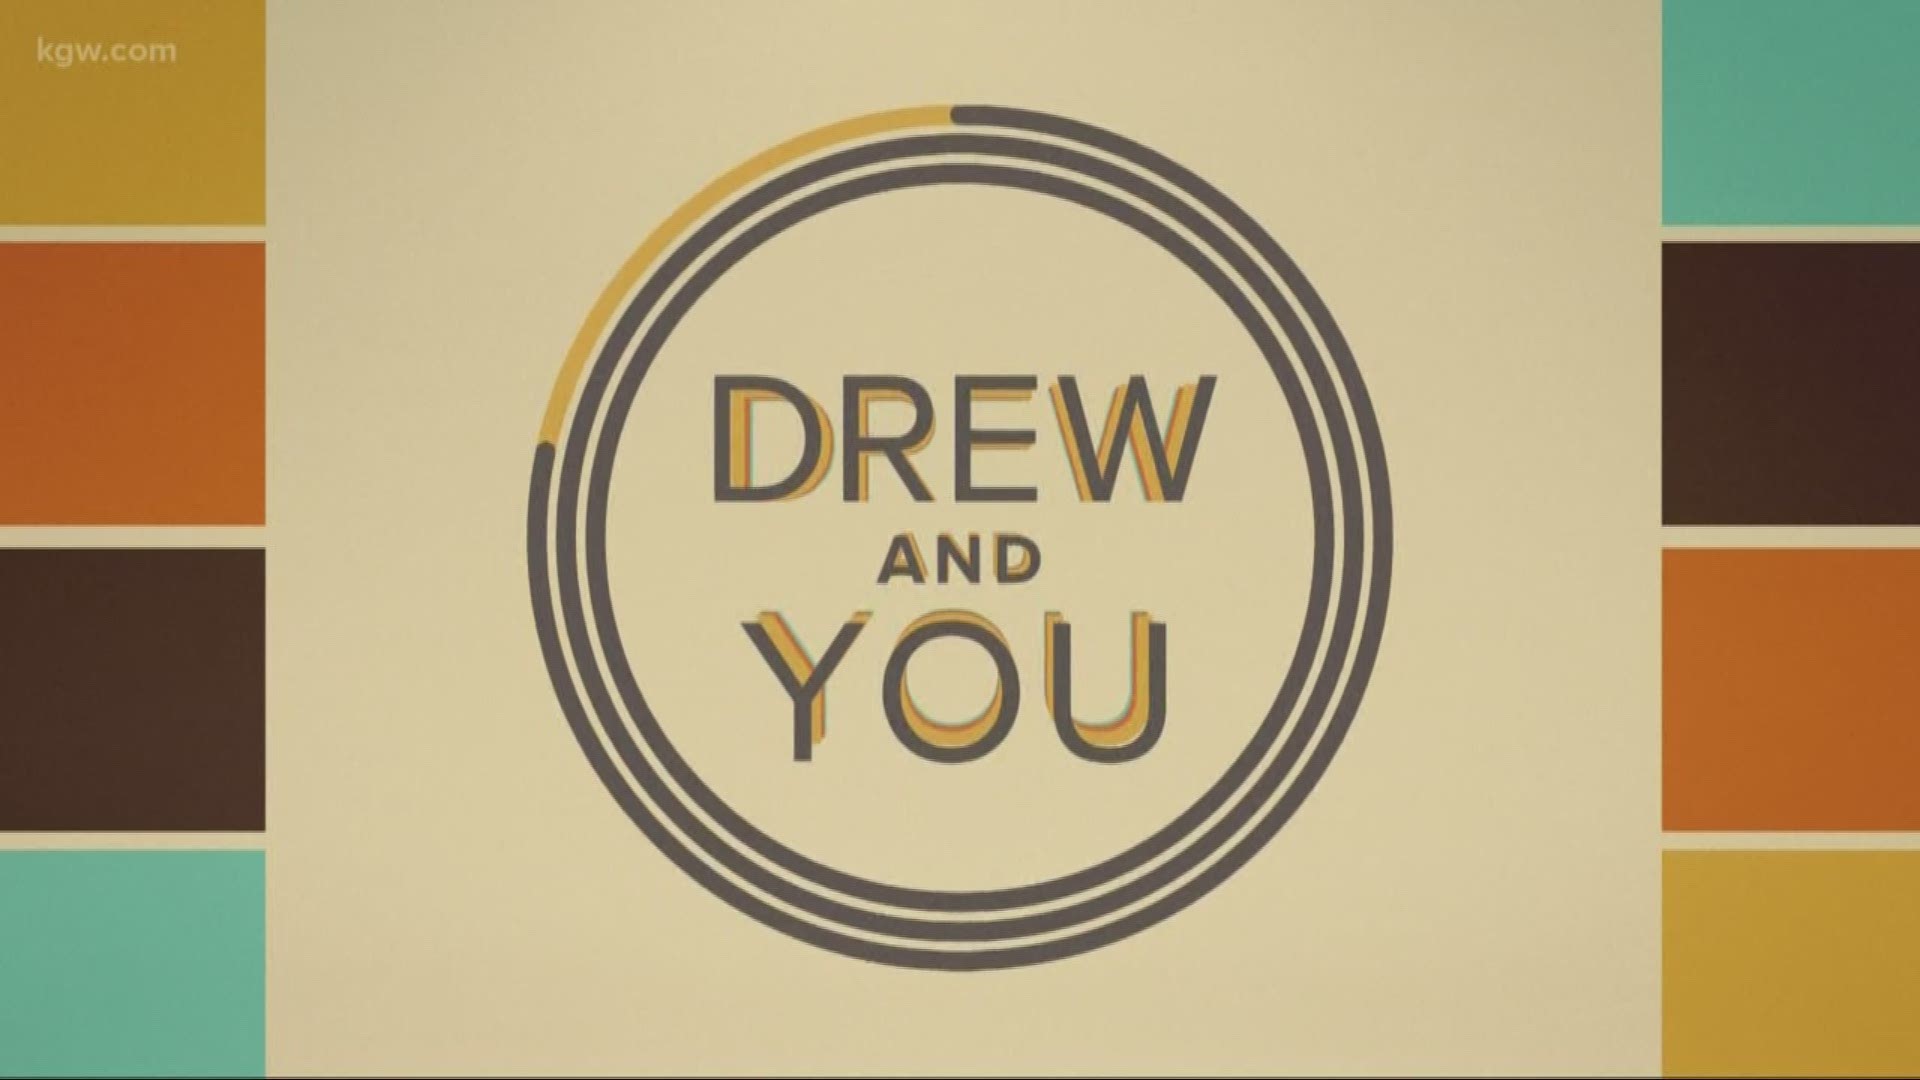 Drew & You: Super Bowl excitement